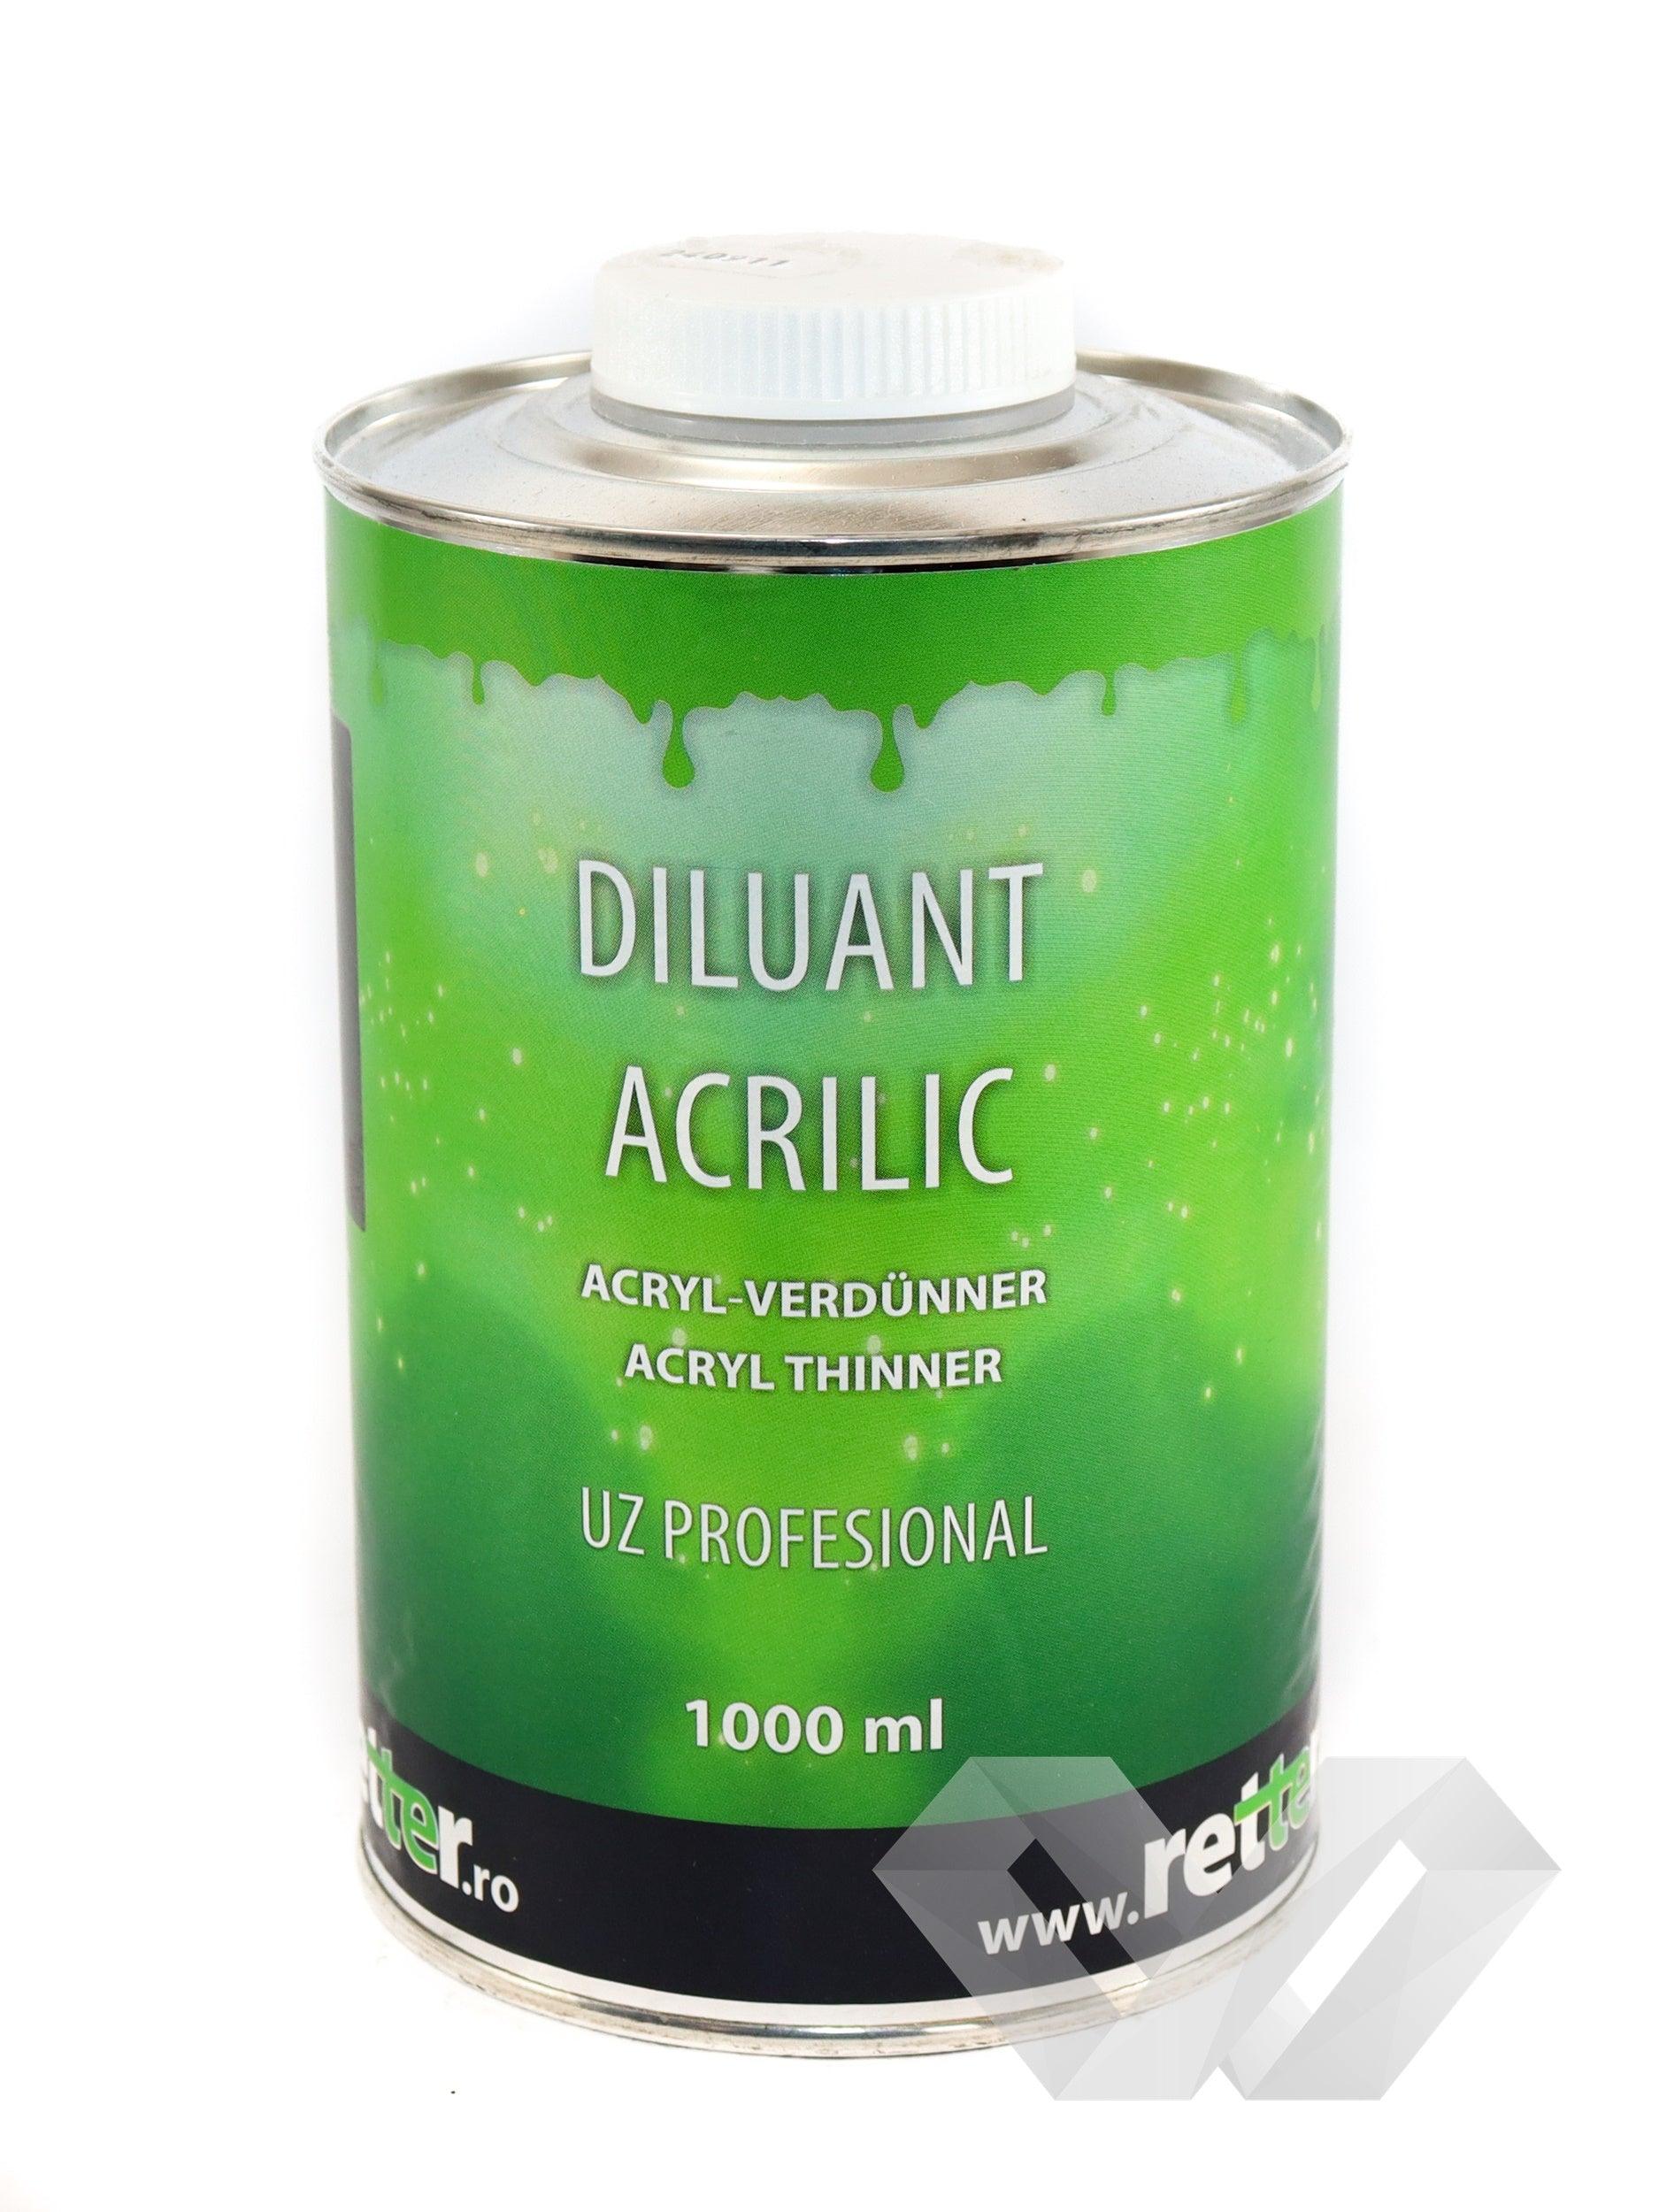 Diluant acrilic Retter, 1000 ml